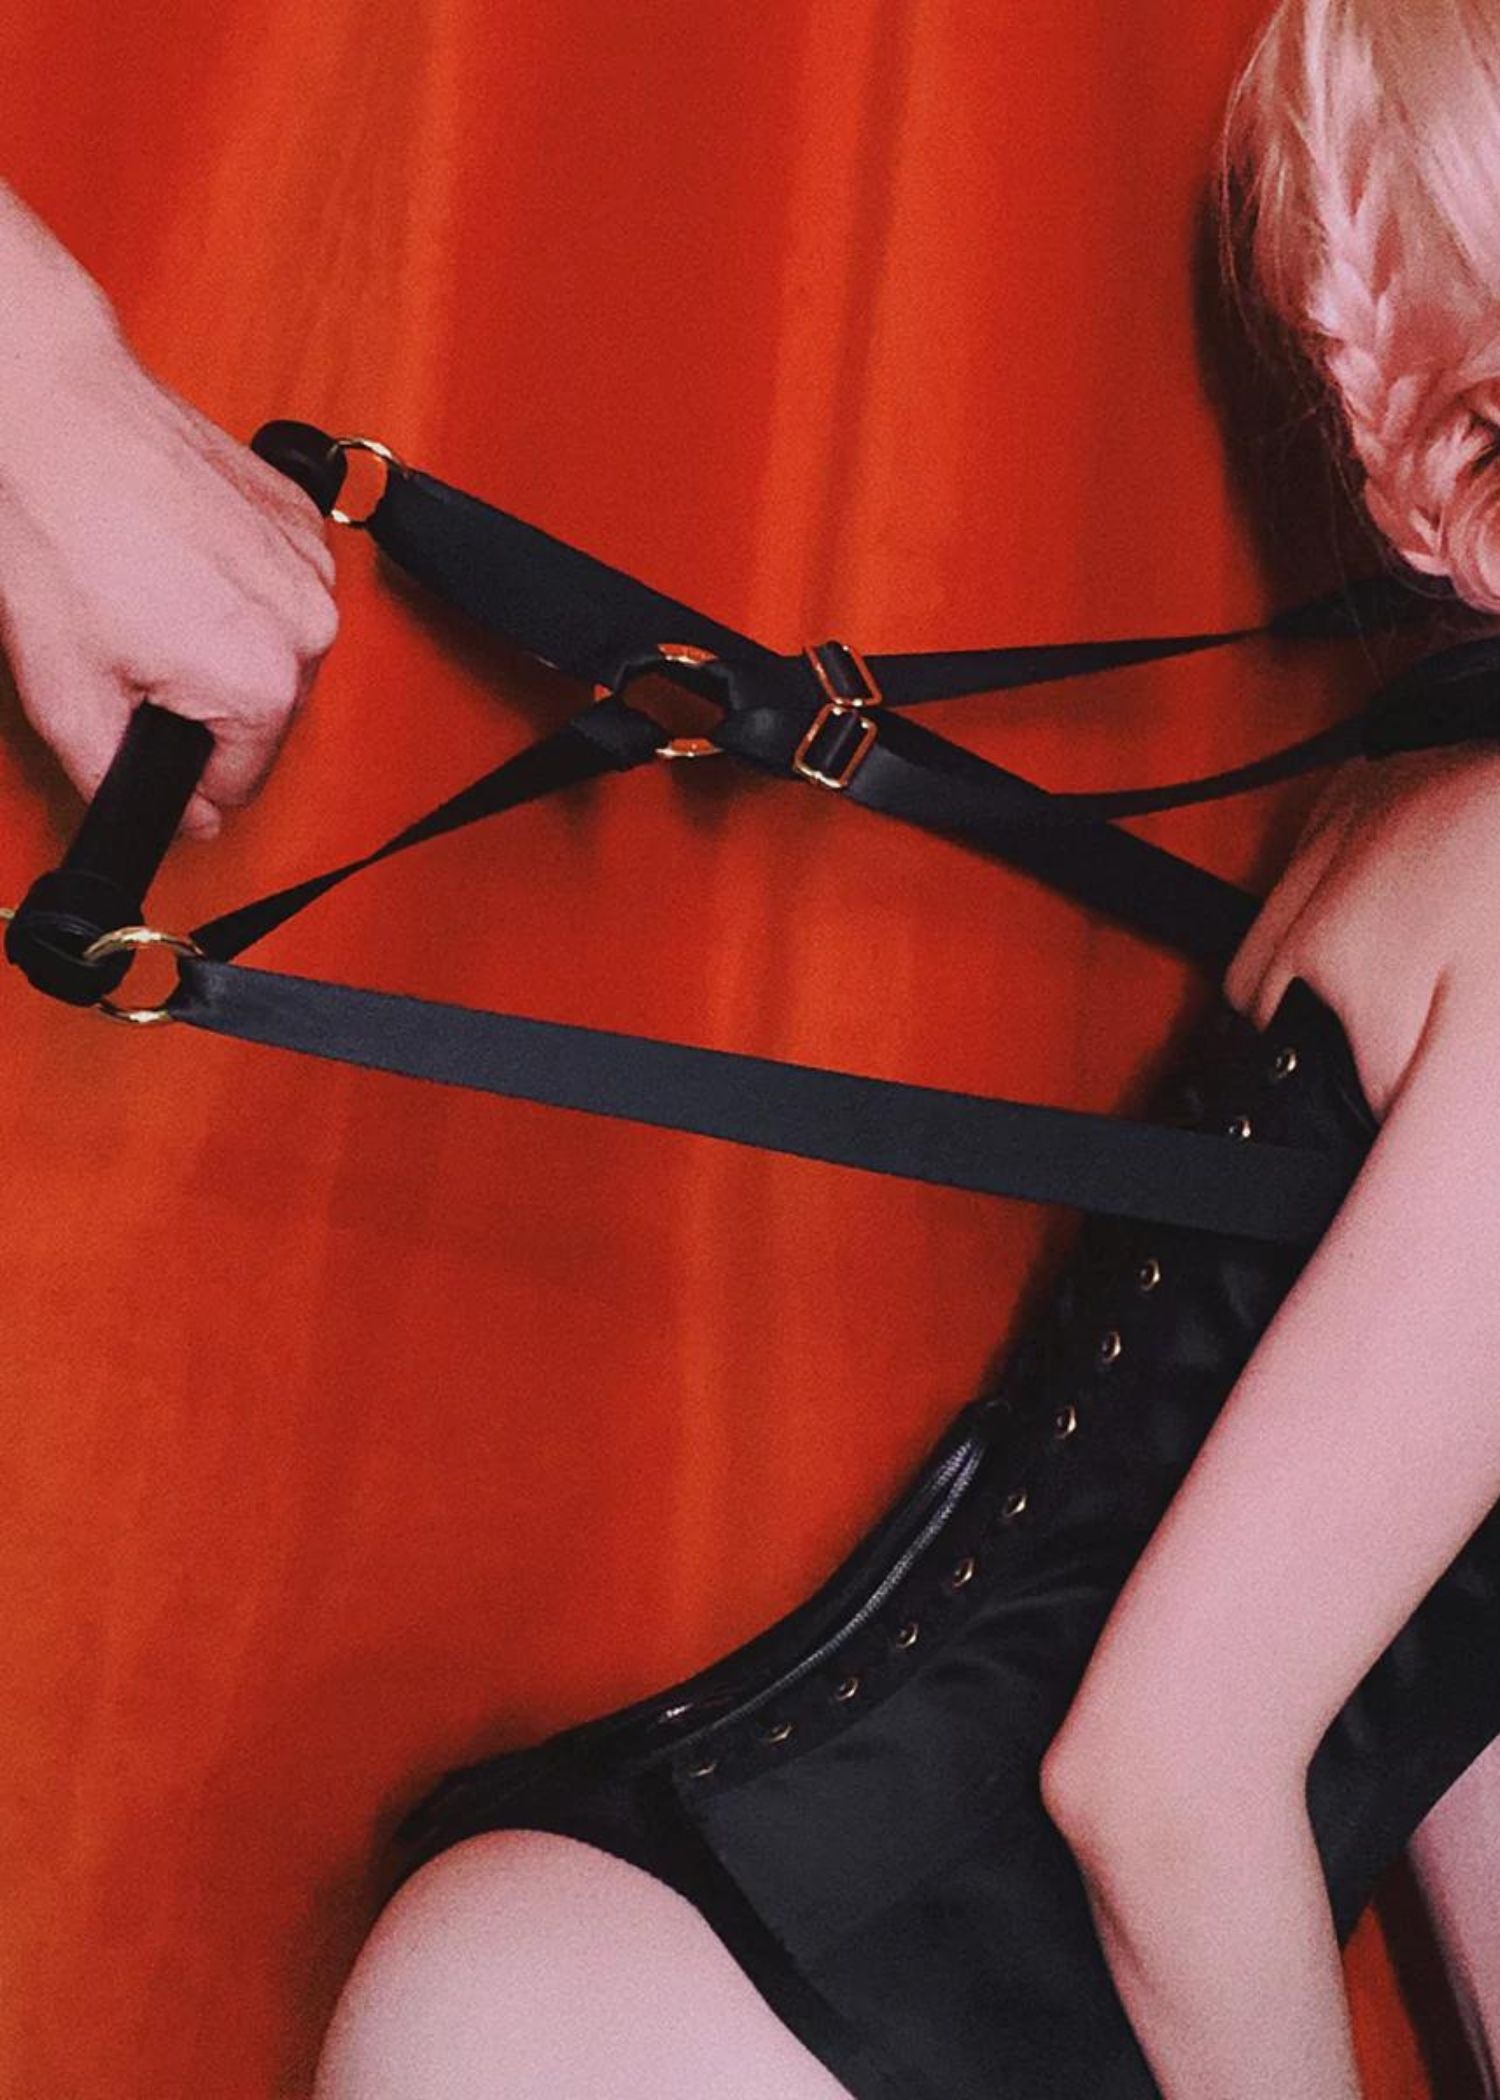 UPKO Adult Harness Restraint Device - BDSM Bondage Harness Set | Avec Amour